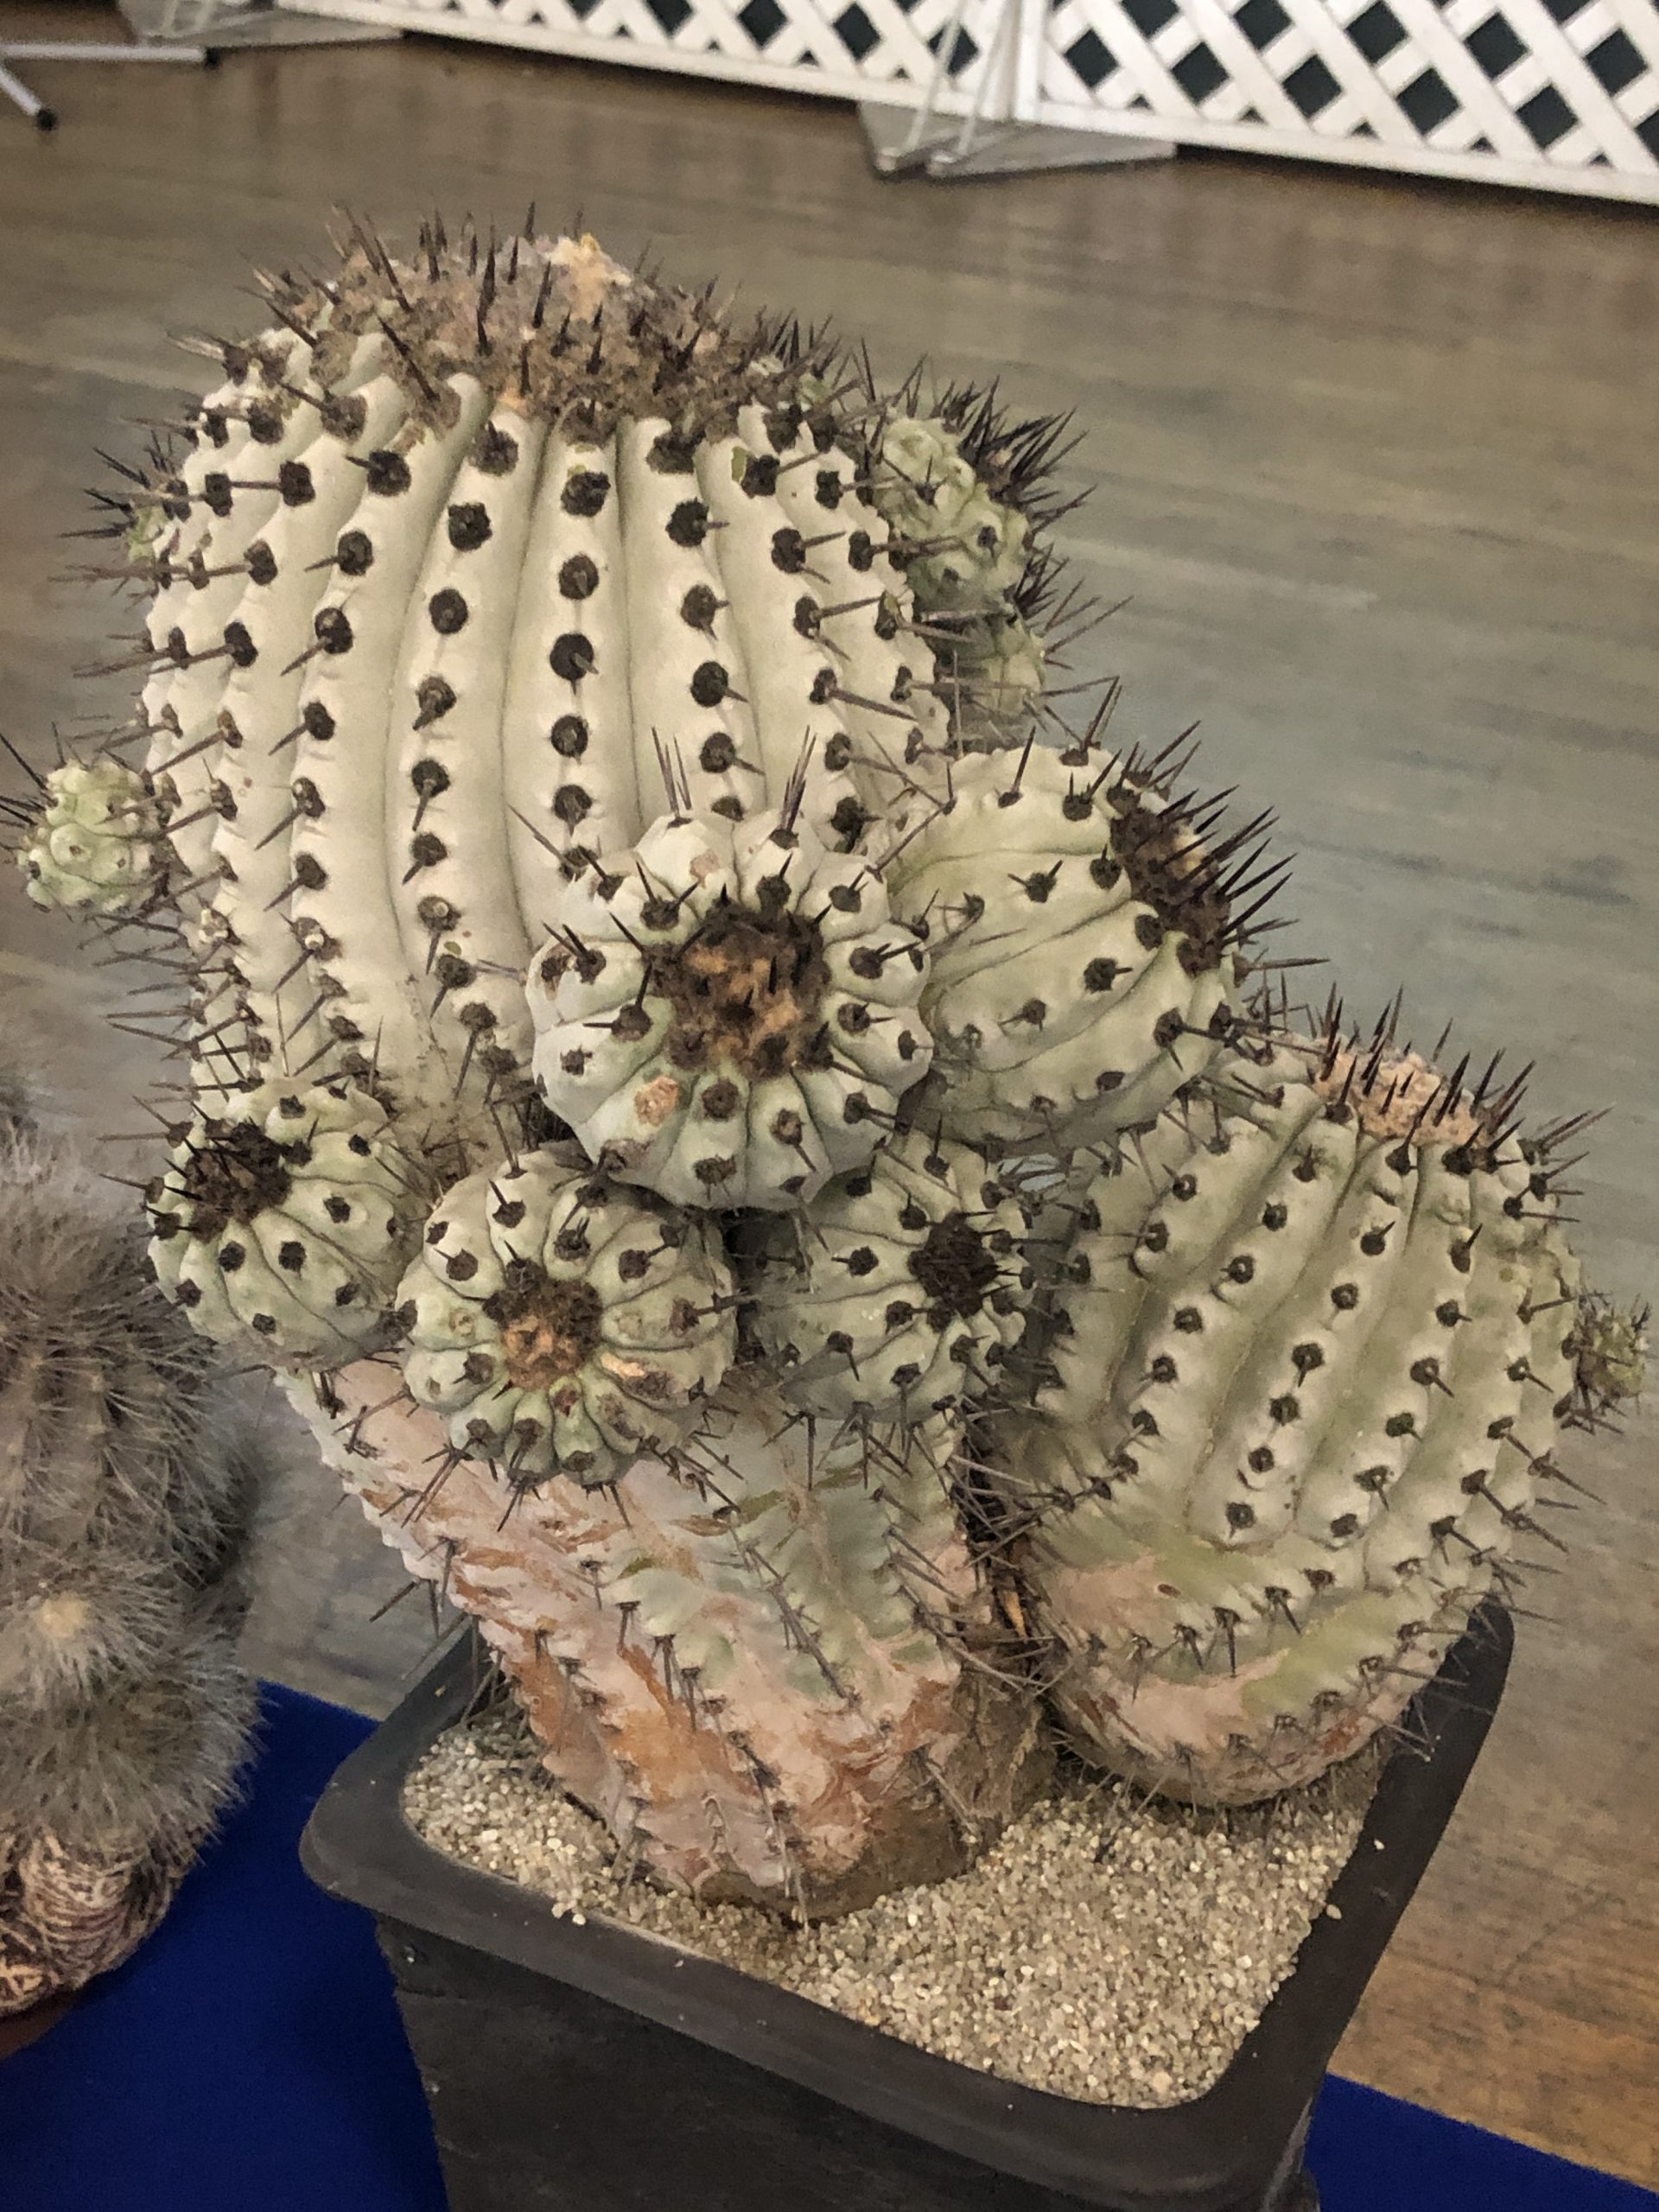 Advanced Cacti
1st: Gary Duke - Copiapoa cinerea